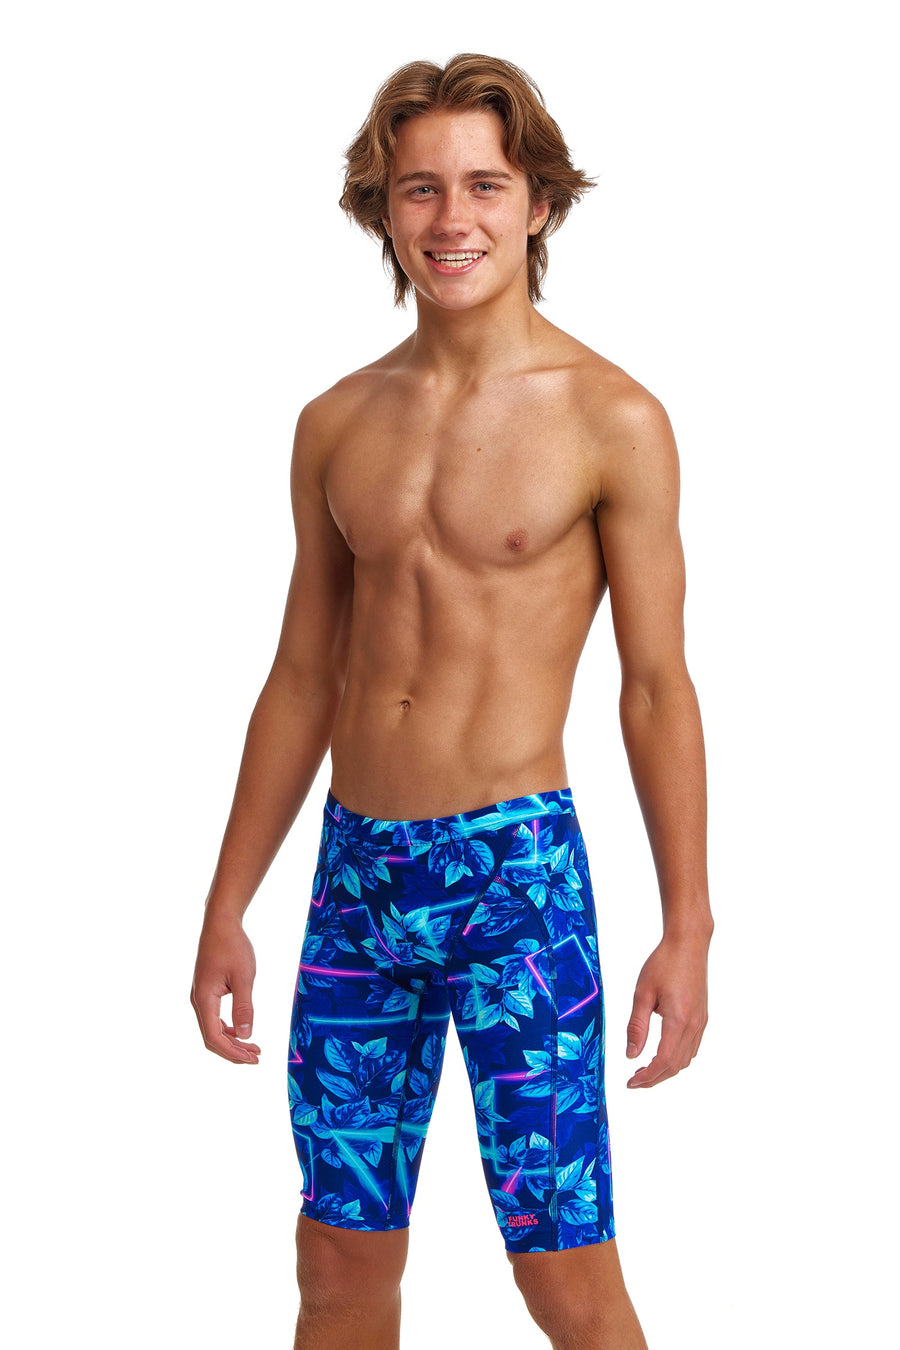 Mens Beach Shorts On Sale  Buy Discount Funky Trunks Beachwear Online